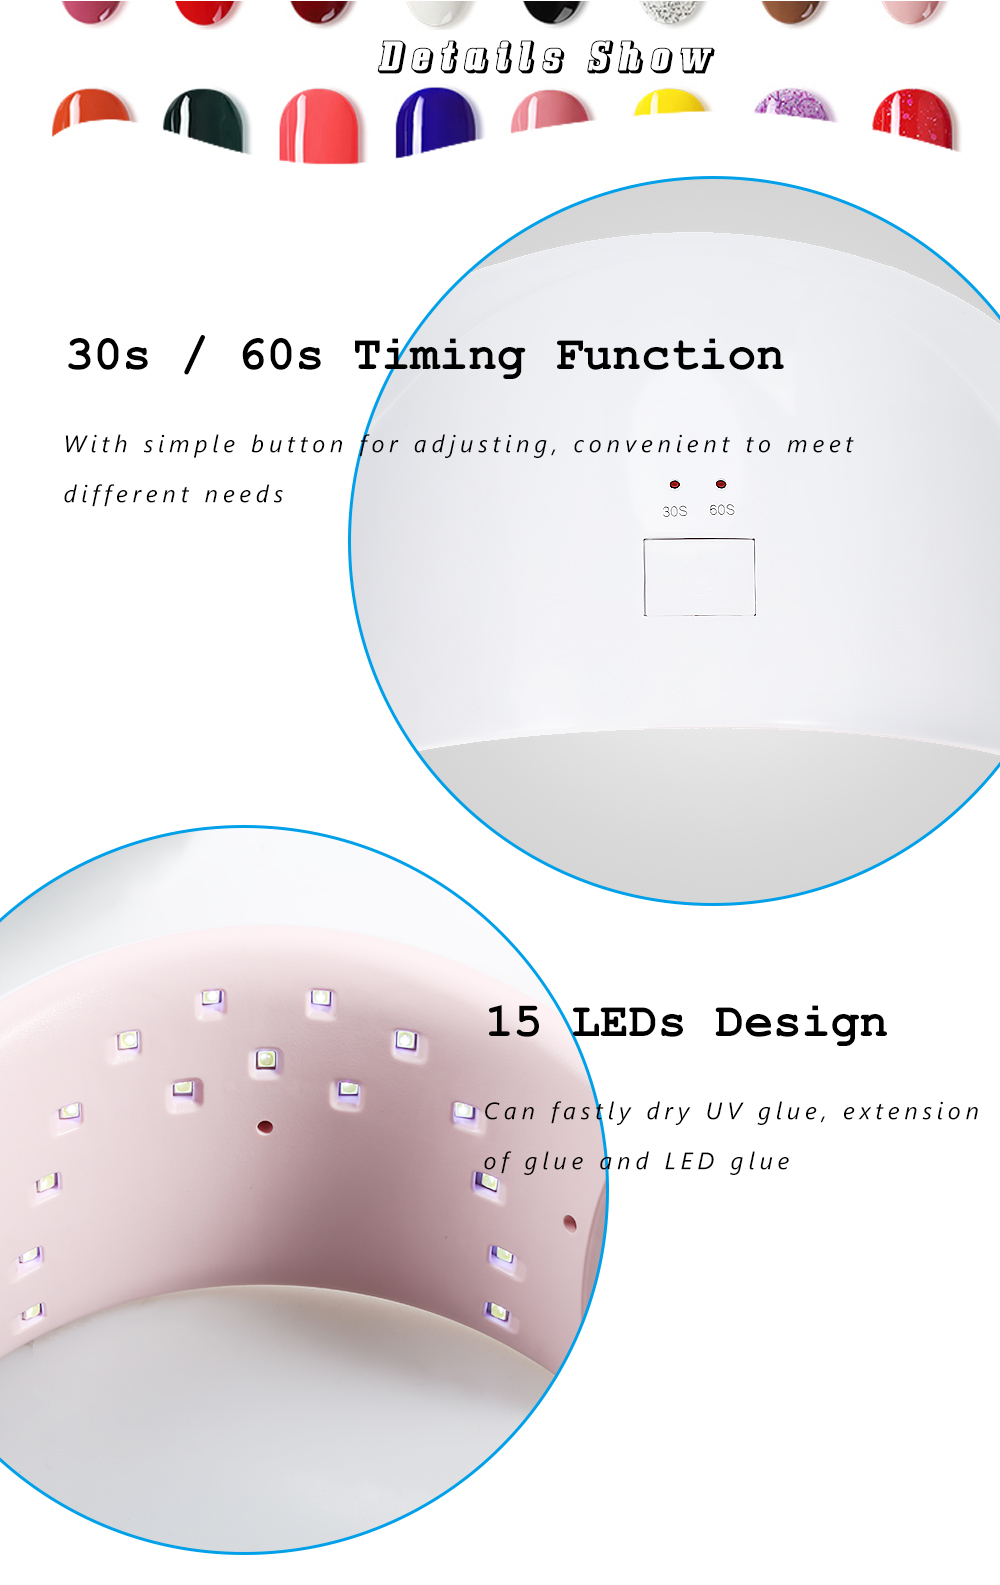 KT - 601 UV LED Smart Nail Dryer Lamp Manicure Tool